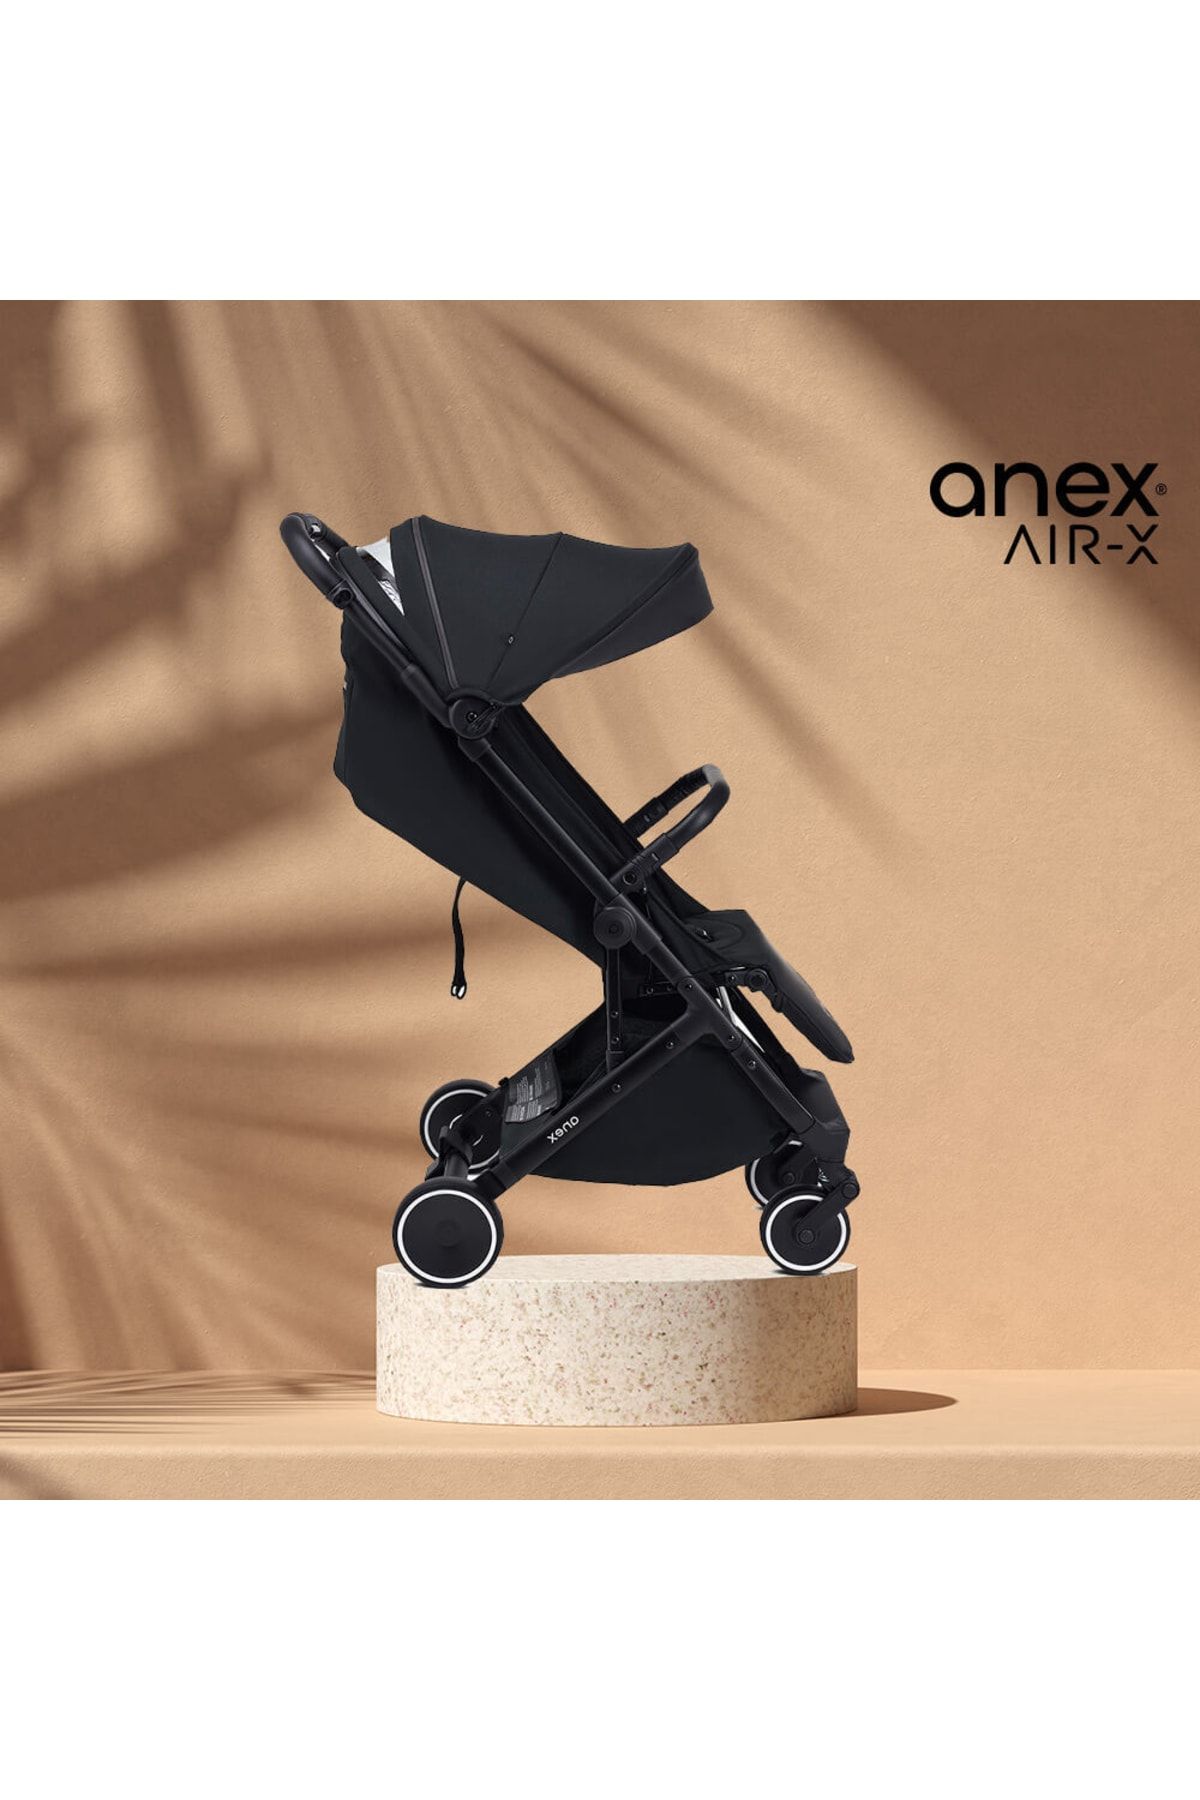 Anex ® Air-x - Siyah-kabin Boy Bebek Arabası